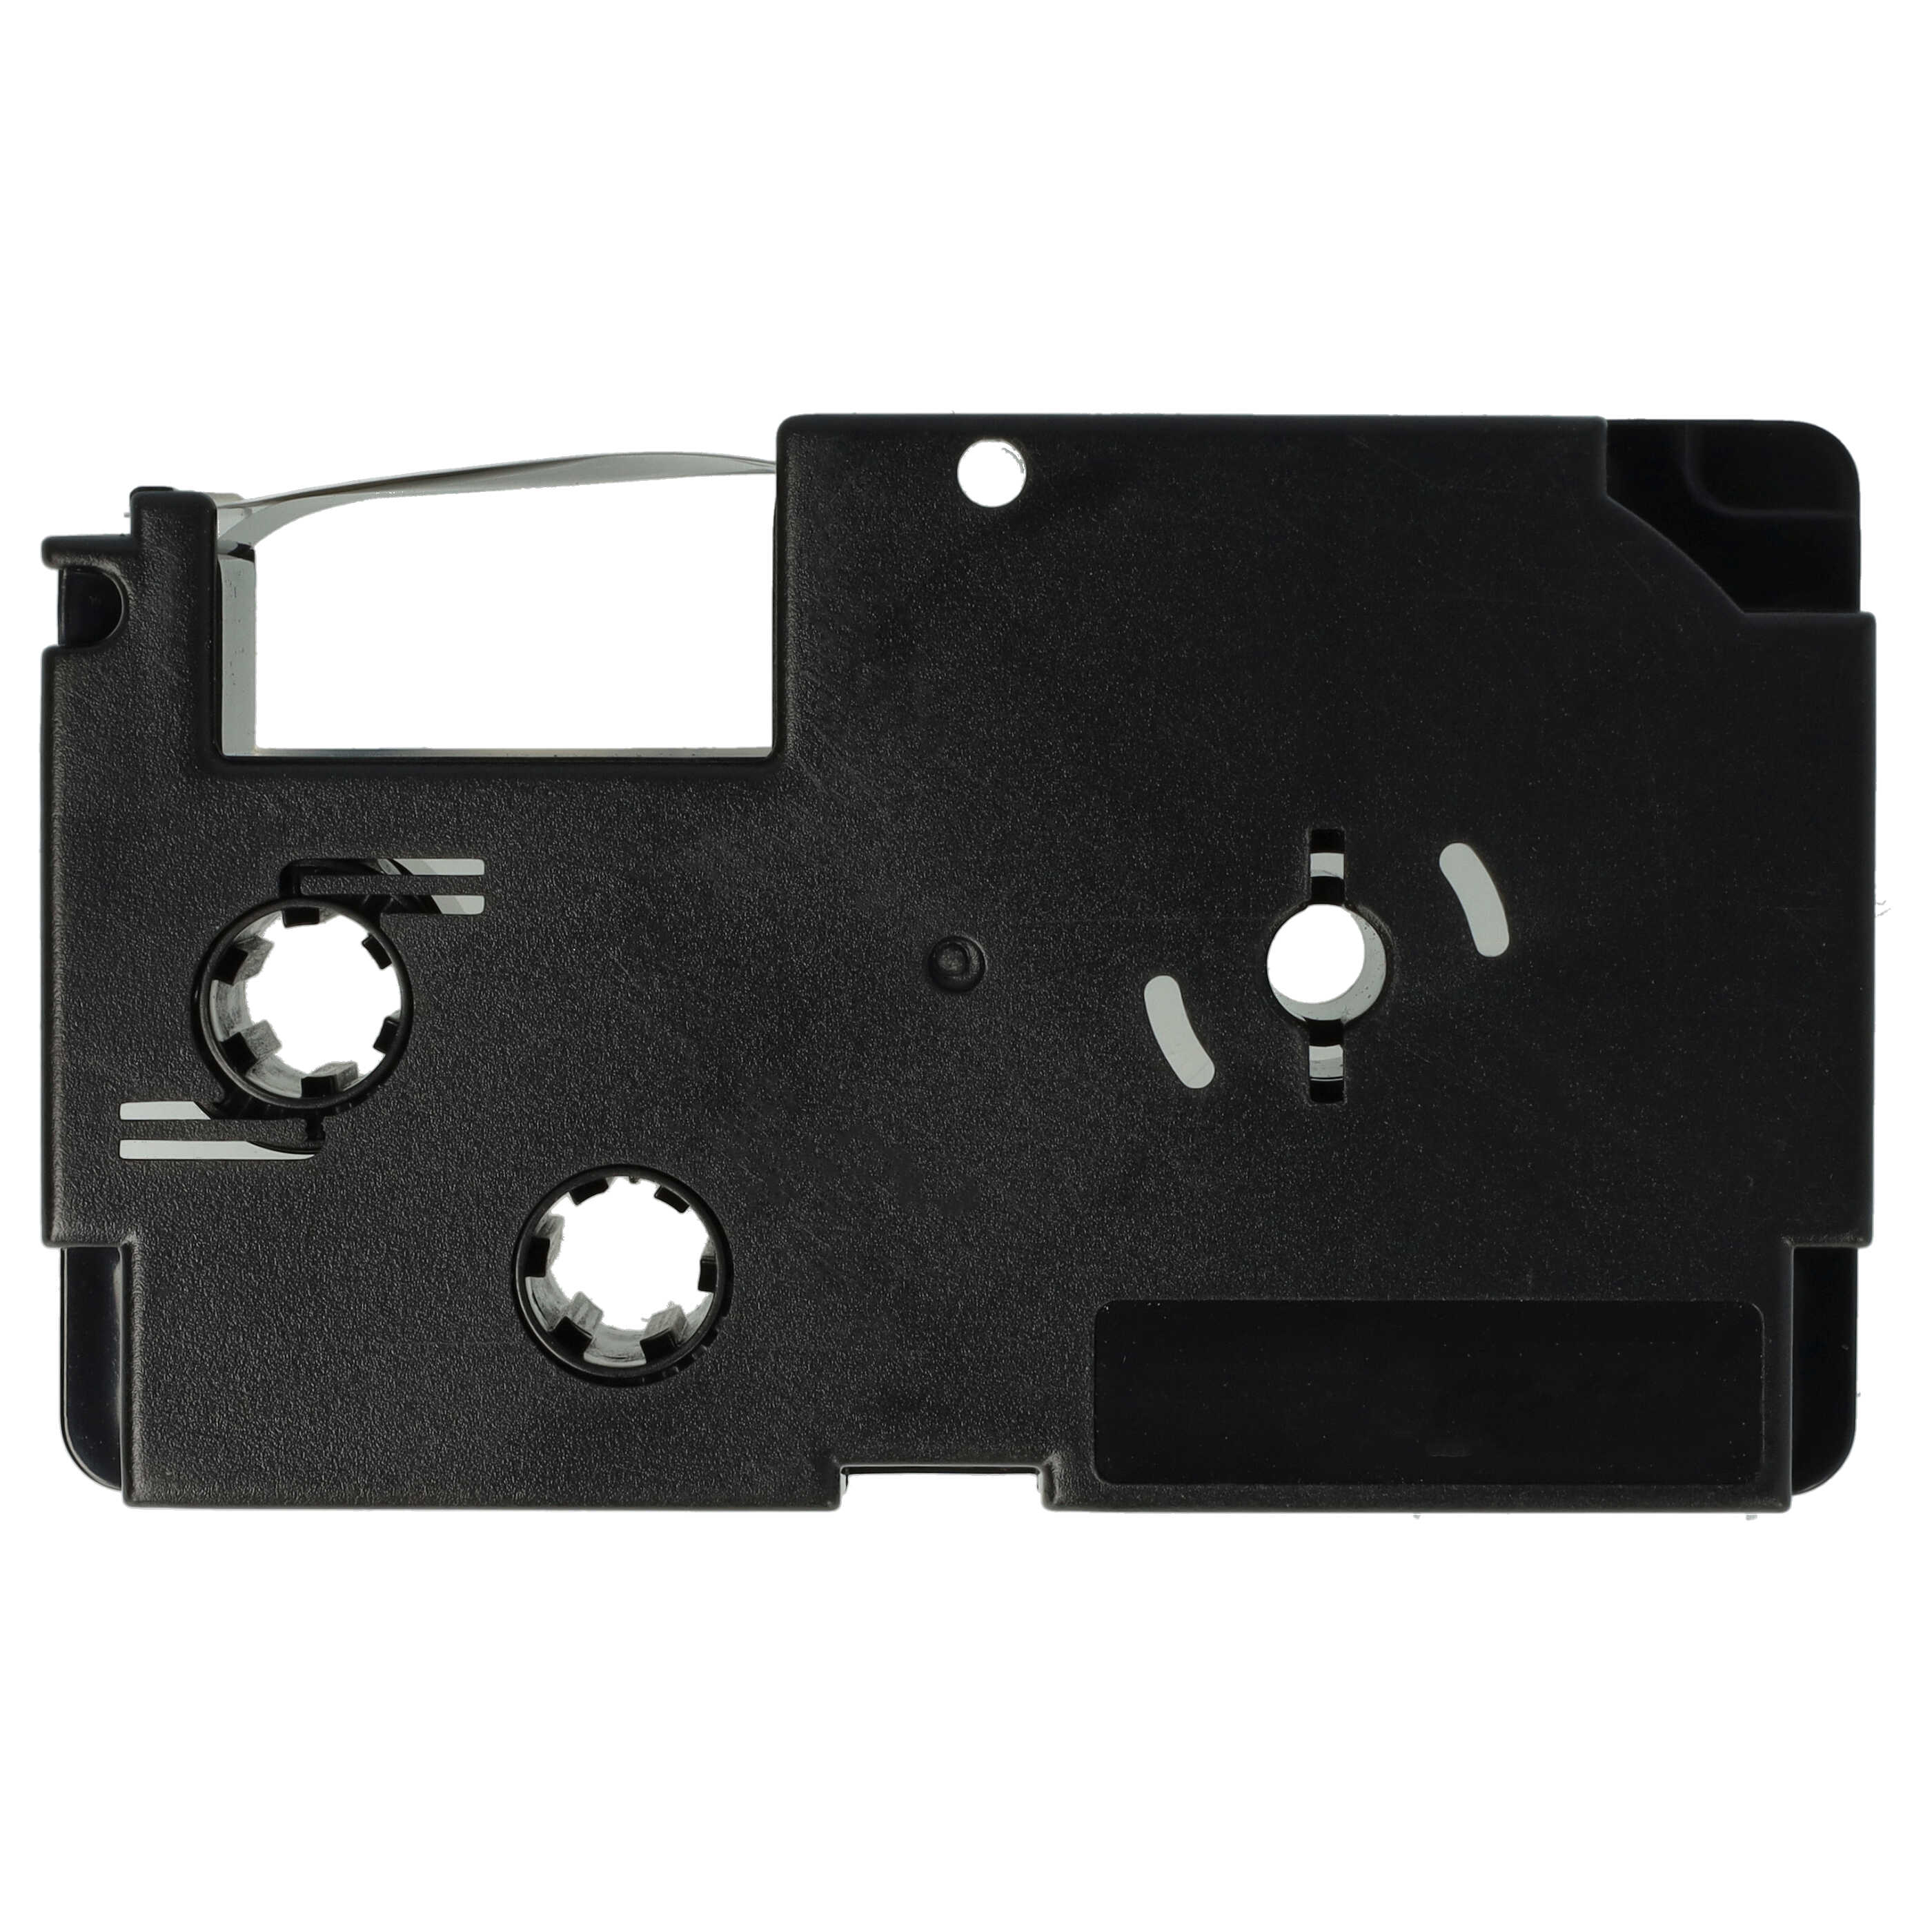 10x Cassetta nastro sostituisce Casio XR-18WE, XR-18WE1 per etichettatrice Casio 18mm nero su bianco